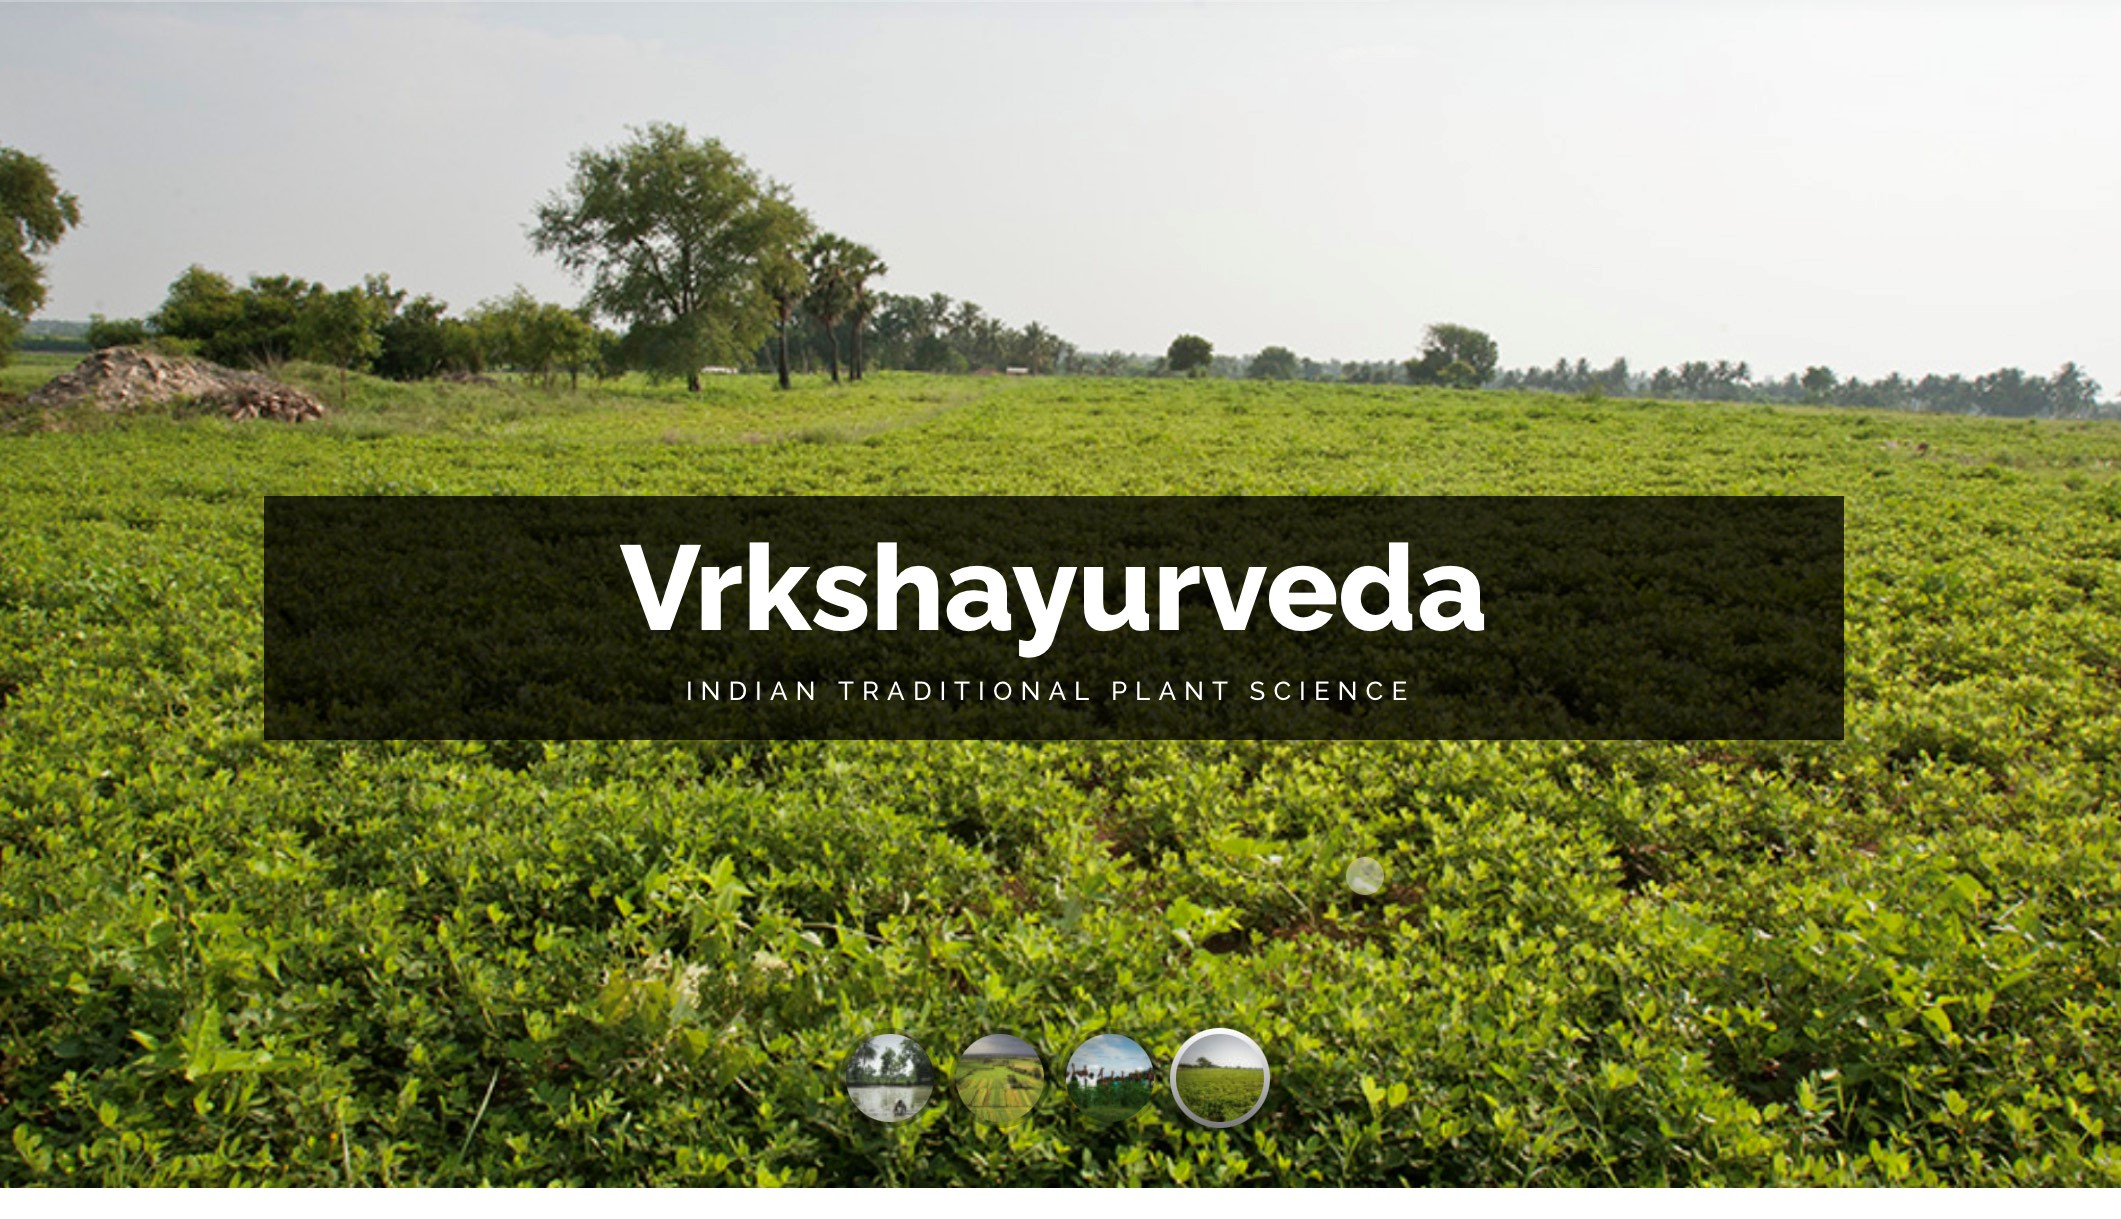 Research Grant For ‘Sourcebook on Vrkshayurveda’